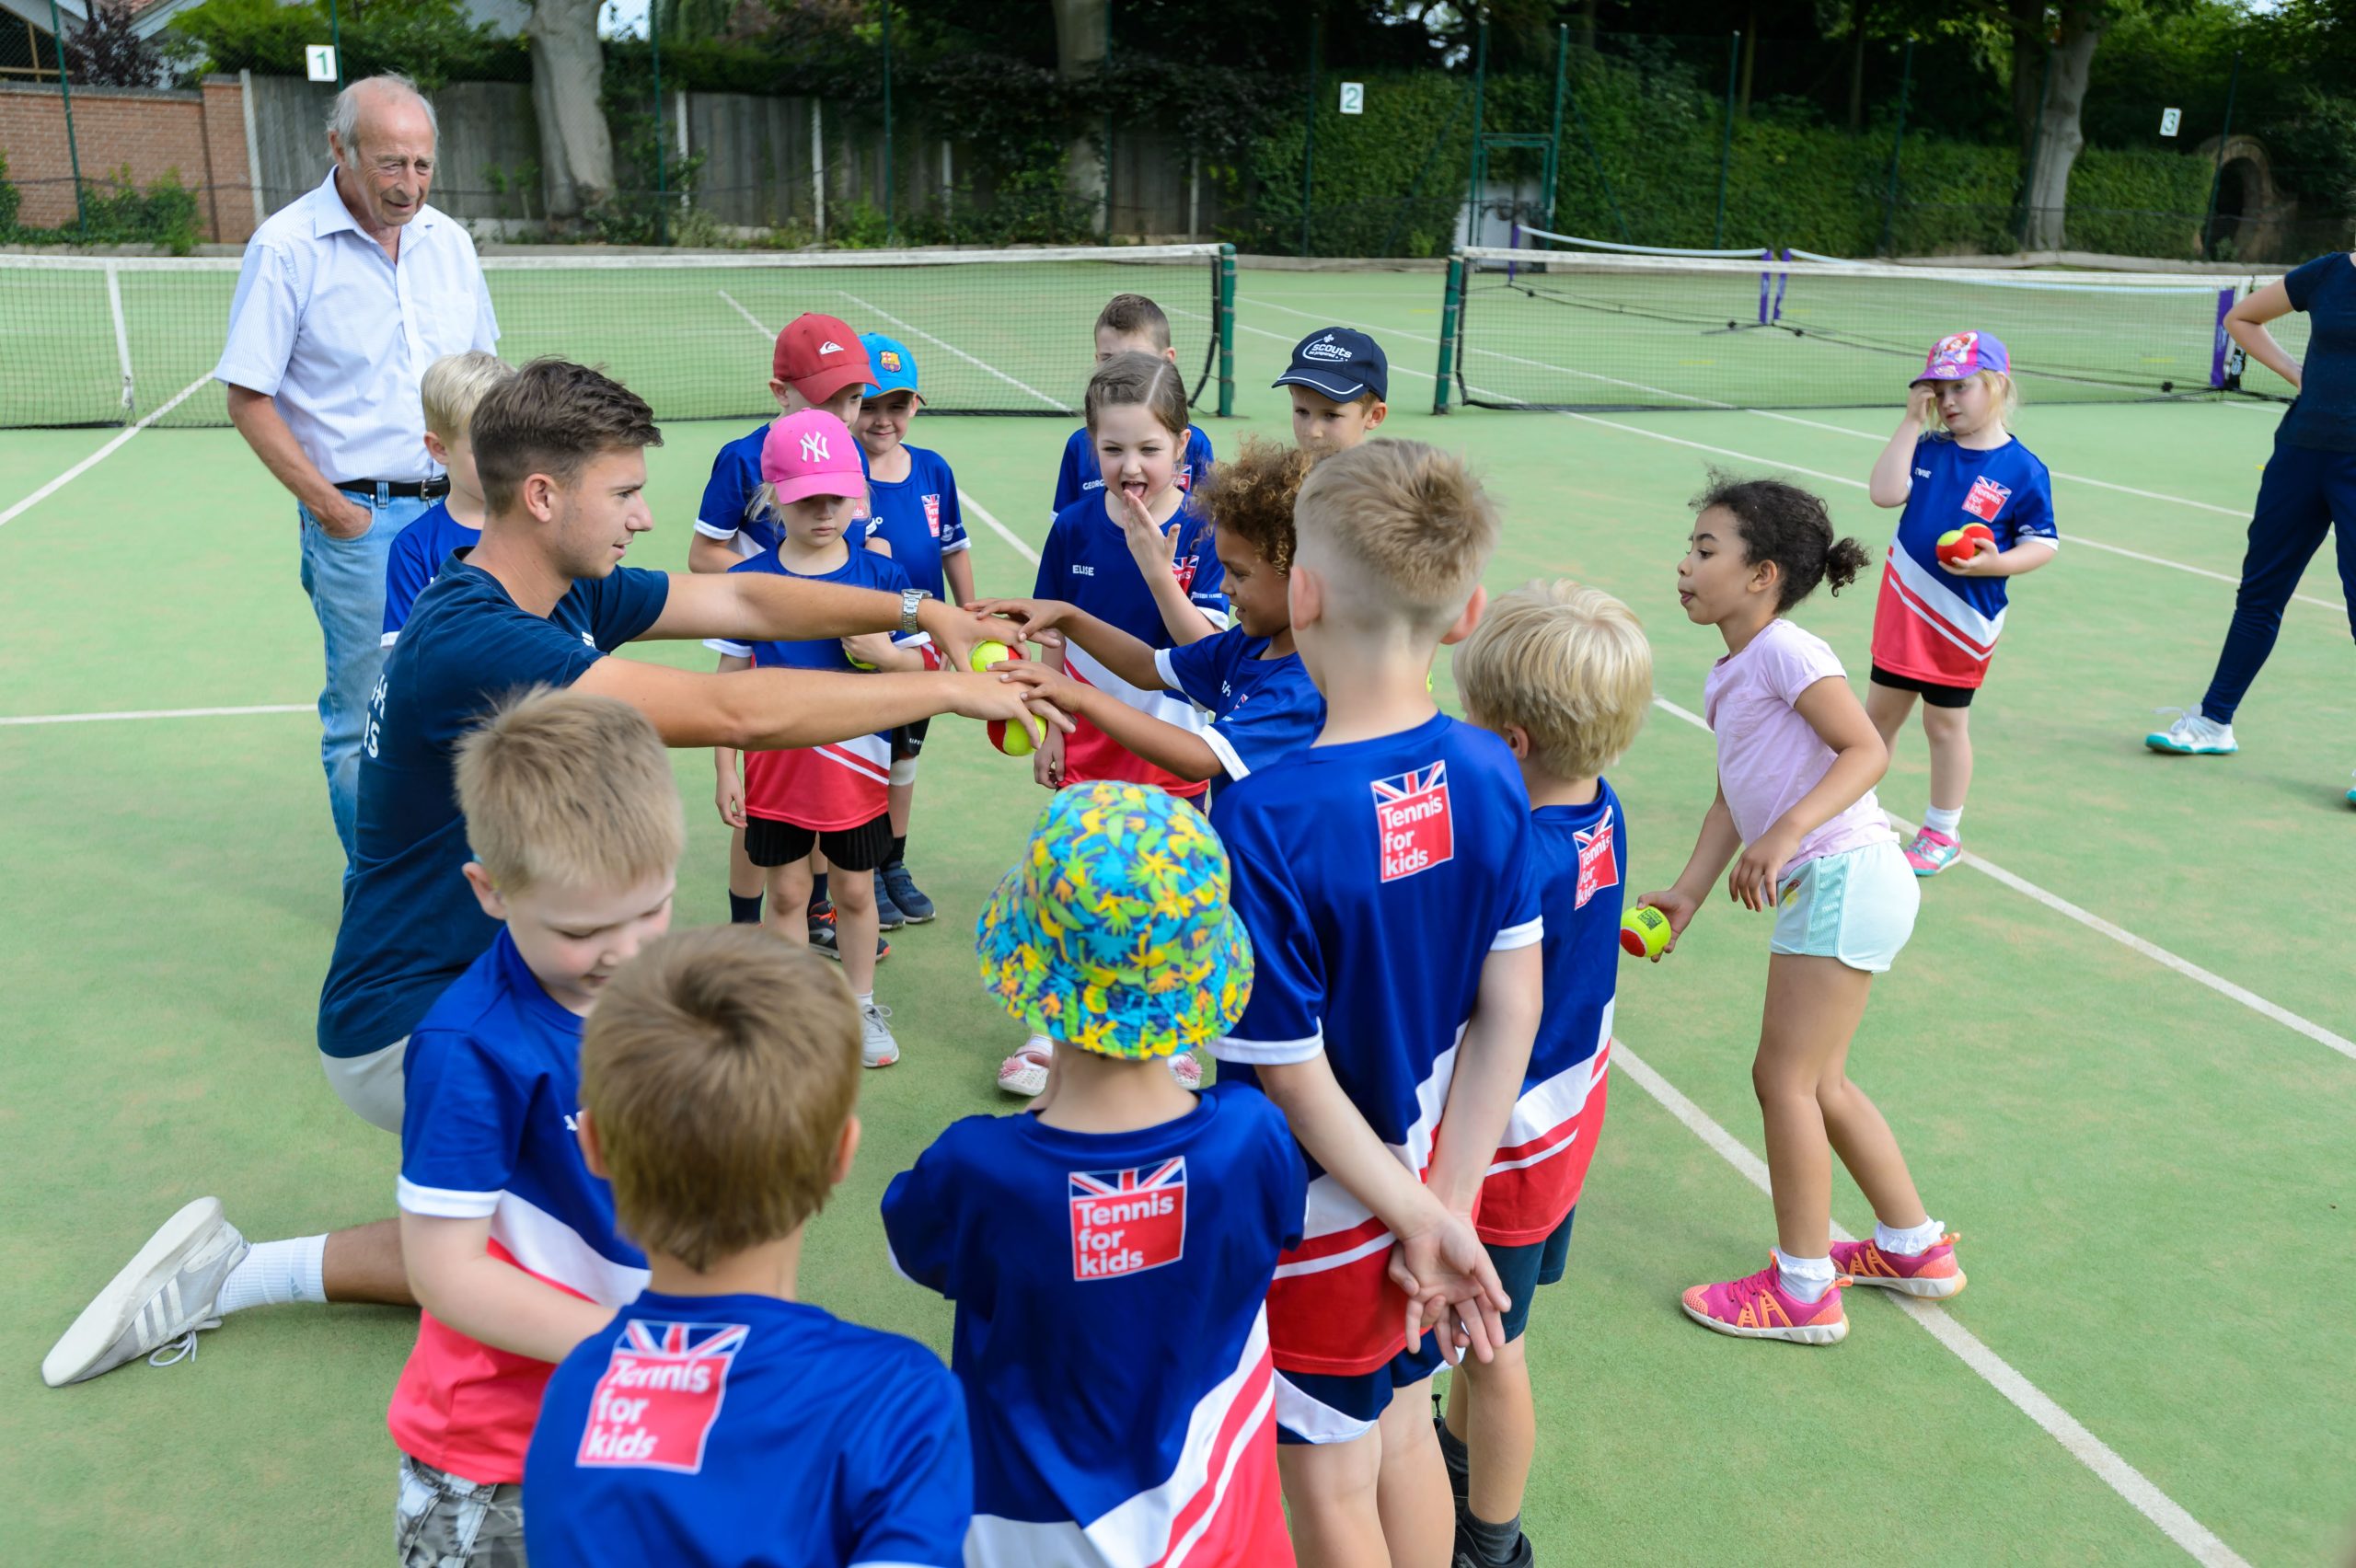 Tennis coach teaching young girls and boys